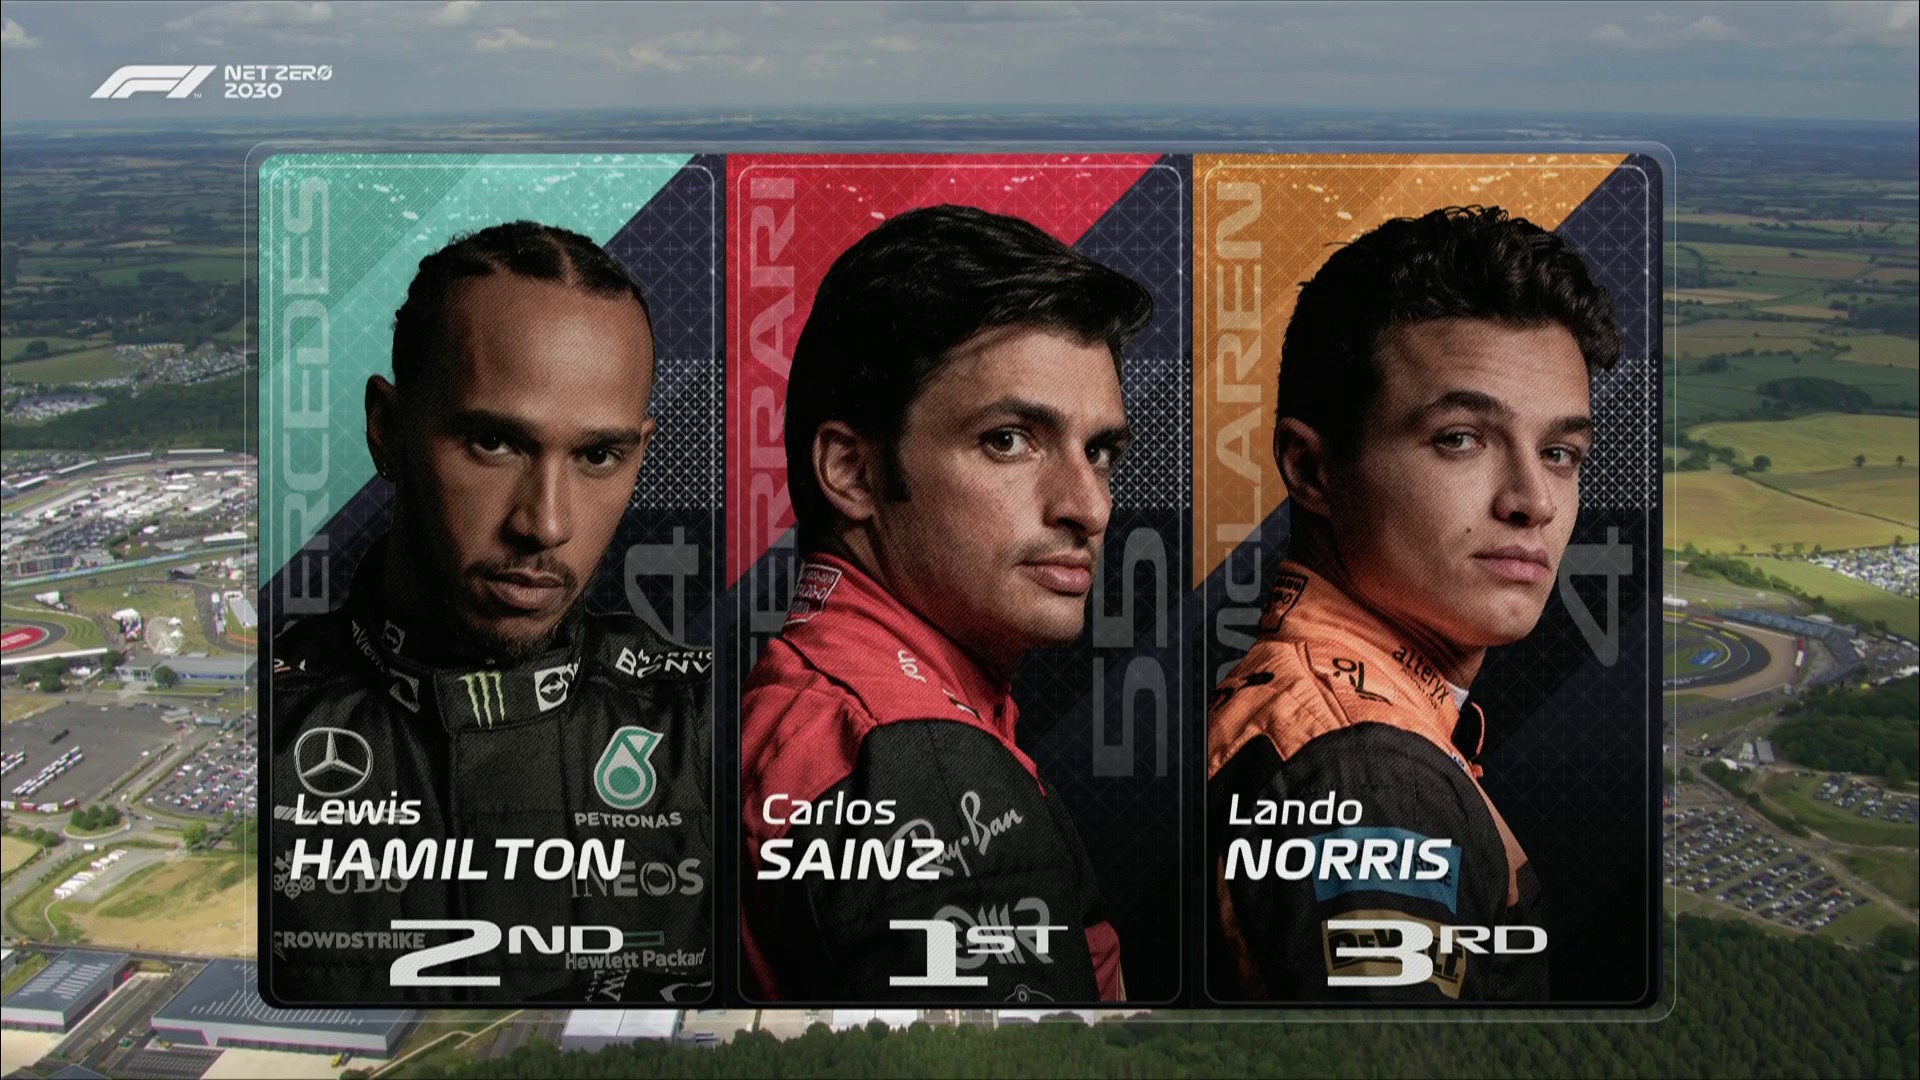 Grand Prix Inggris: Carlos Sainz Kandaskan Dominasi Hamilton di Sirkuit Silverstone 